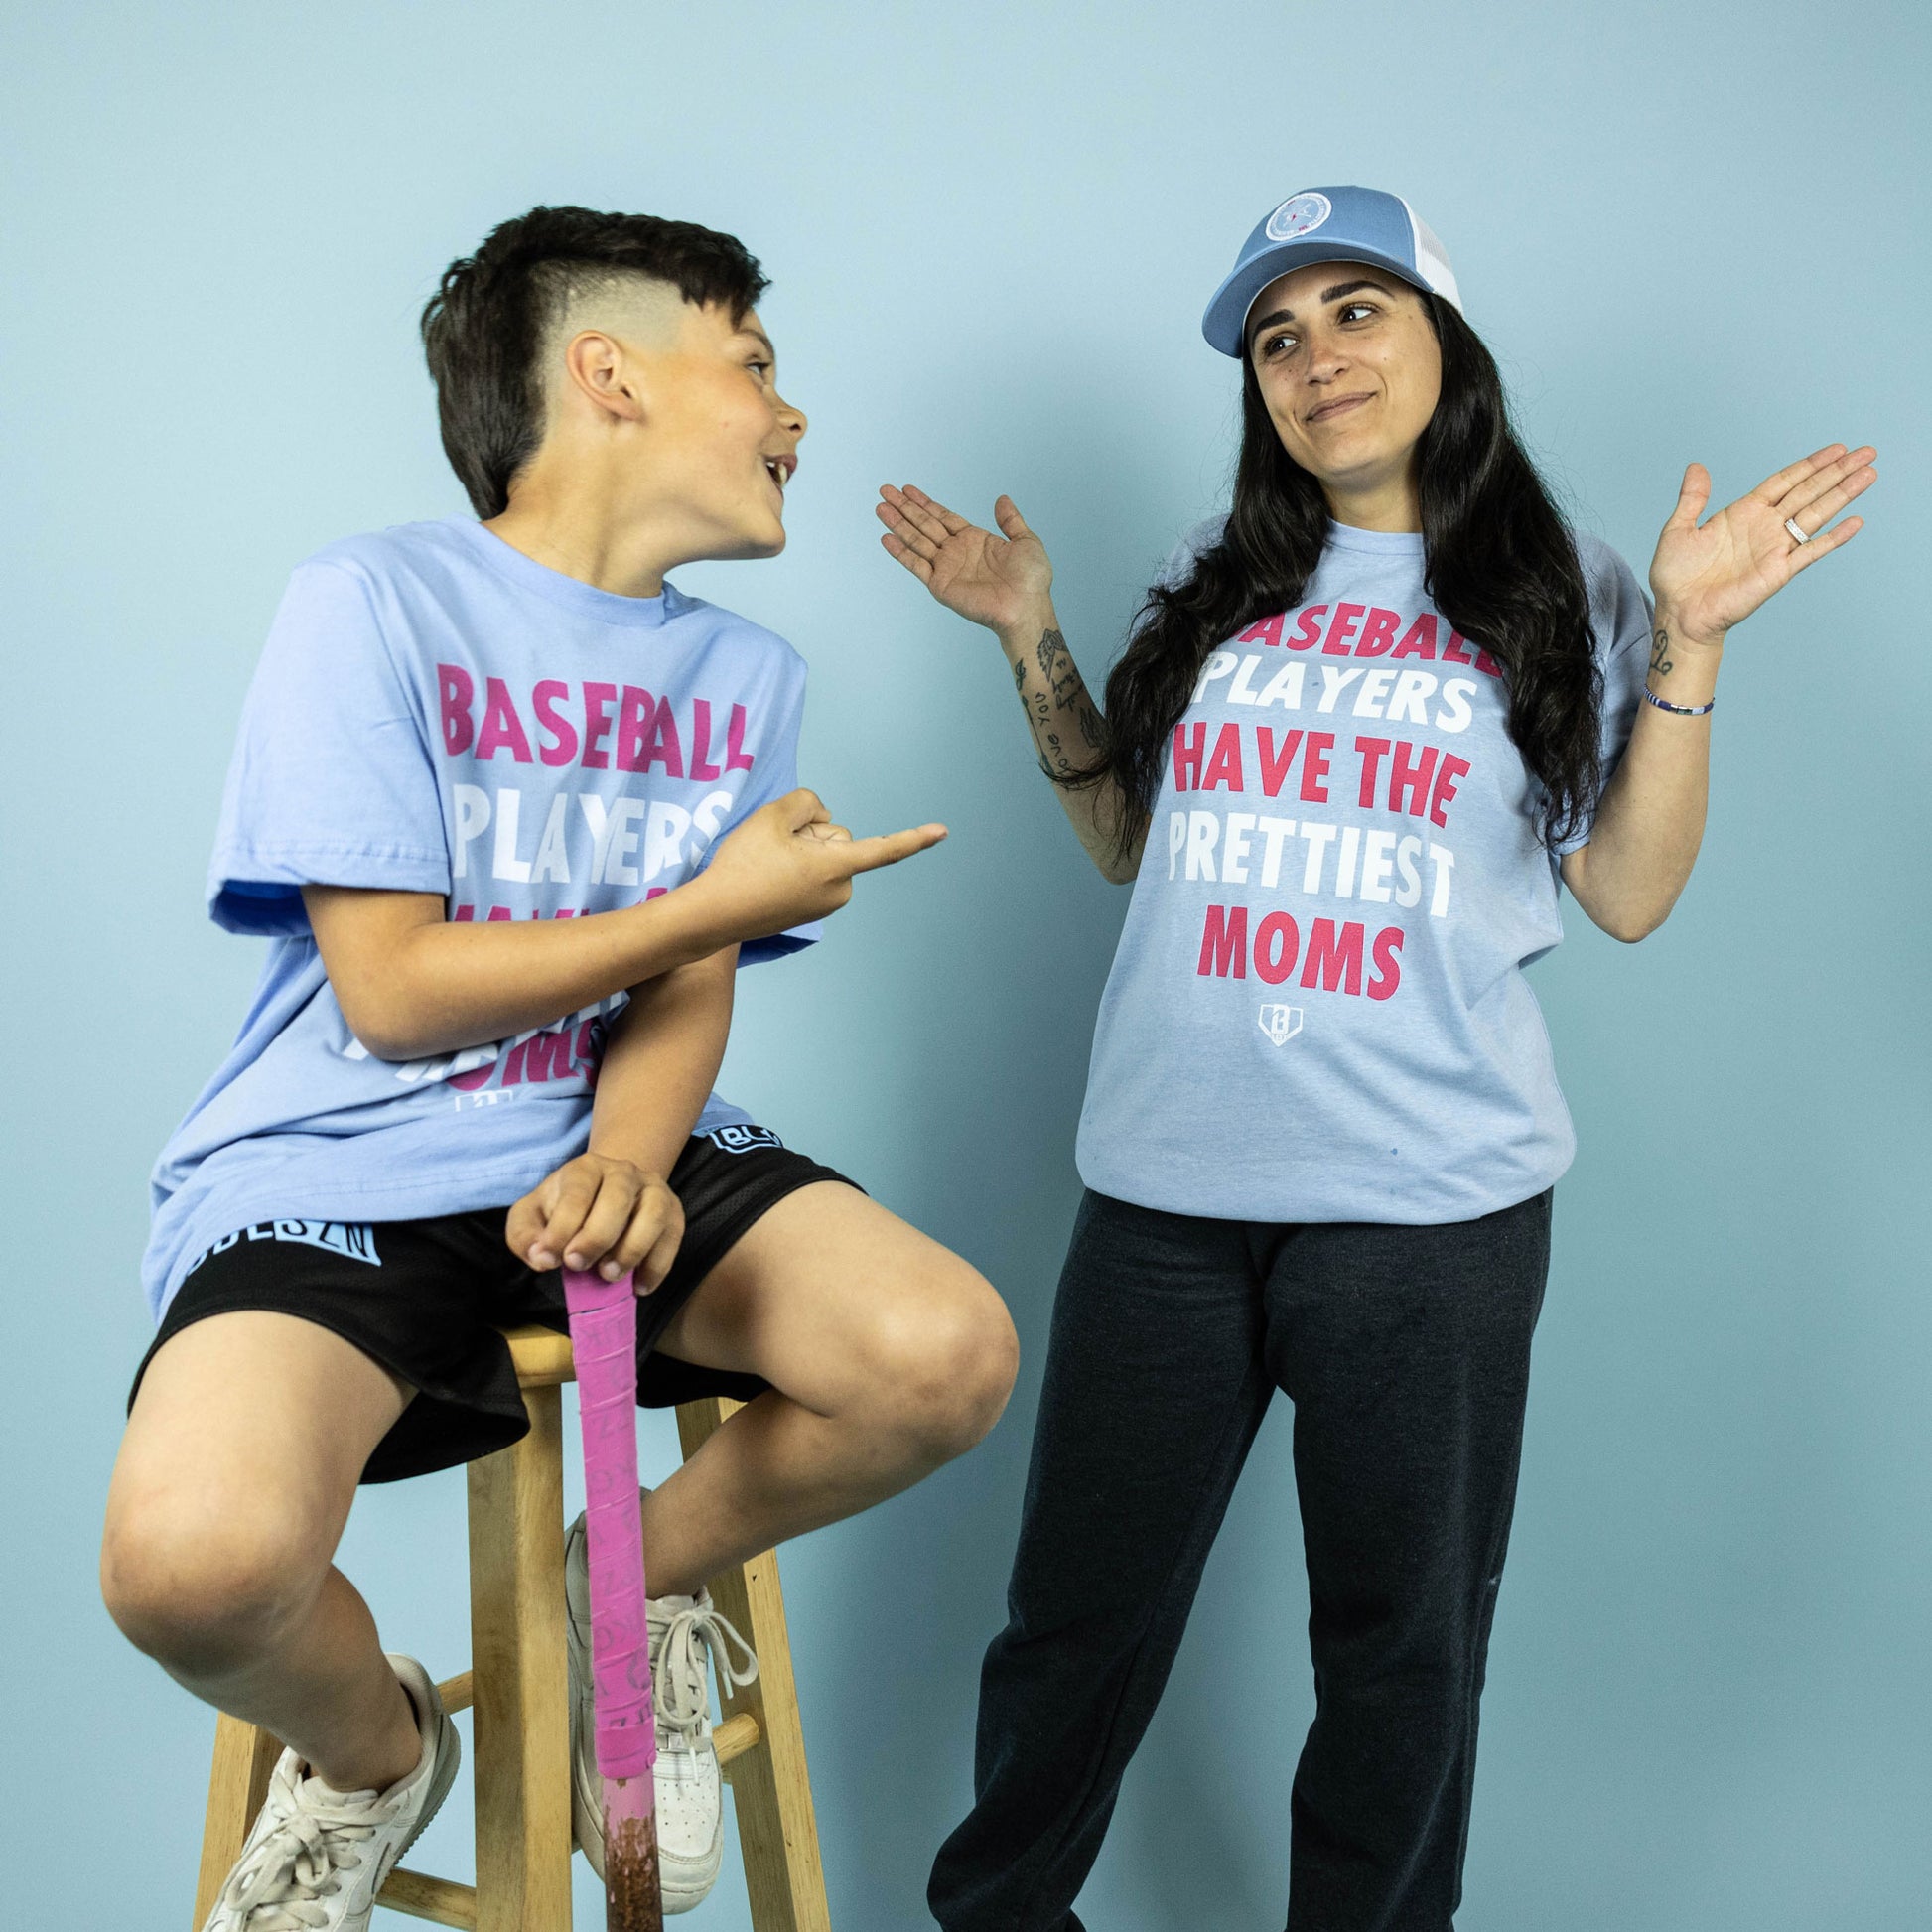 Class of 2021 Senior Baseball Mom Short-Sleeve T-Shirt for women - Gra –  Spicy Pizza Designs